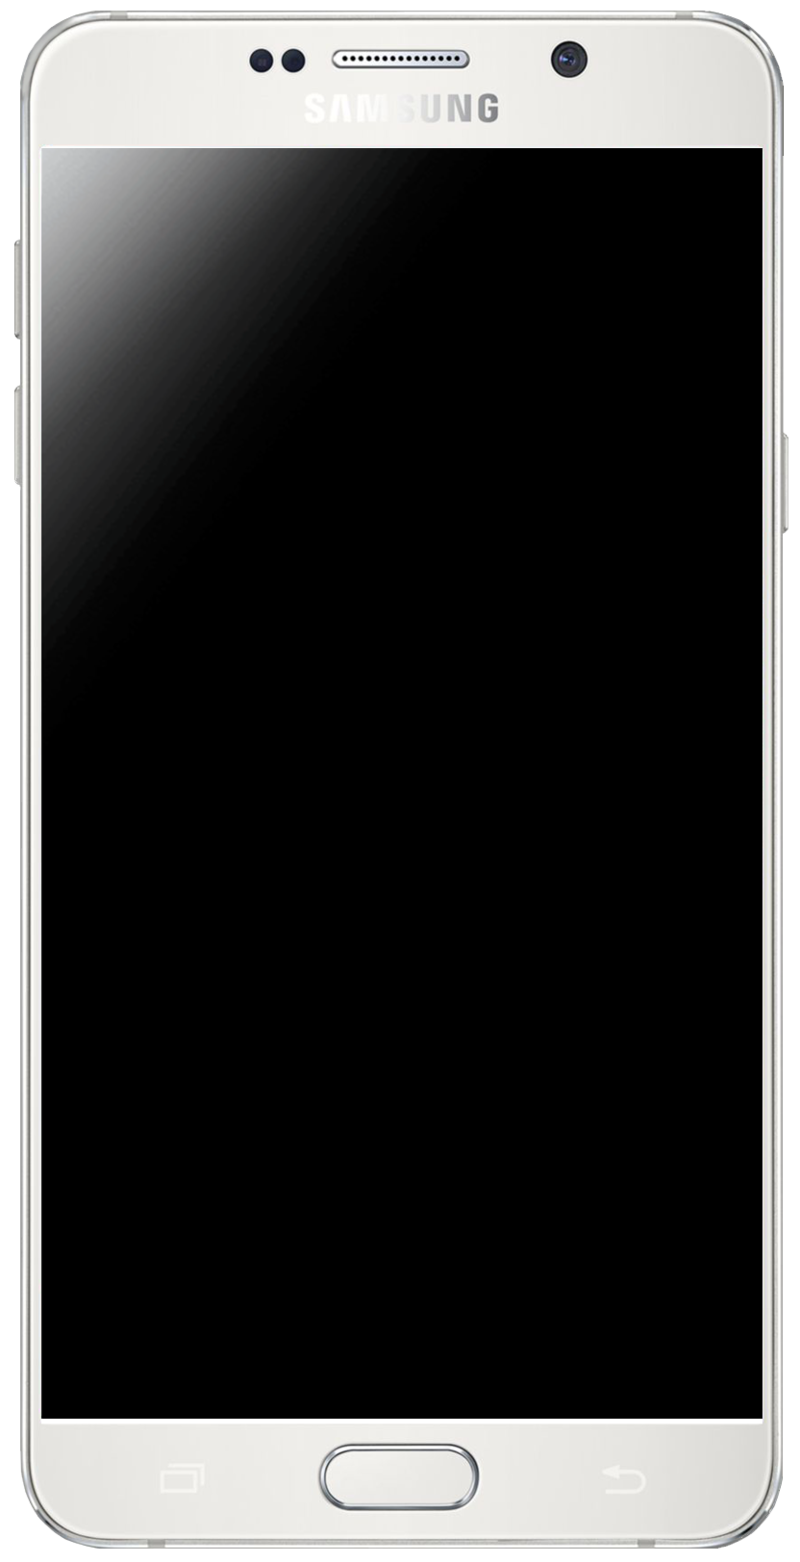 Samsung Galaxy Note 8.0 - Wikipedia